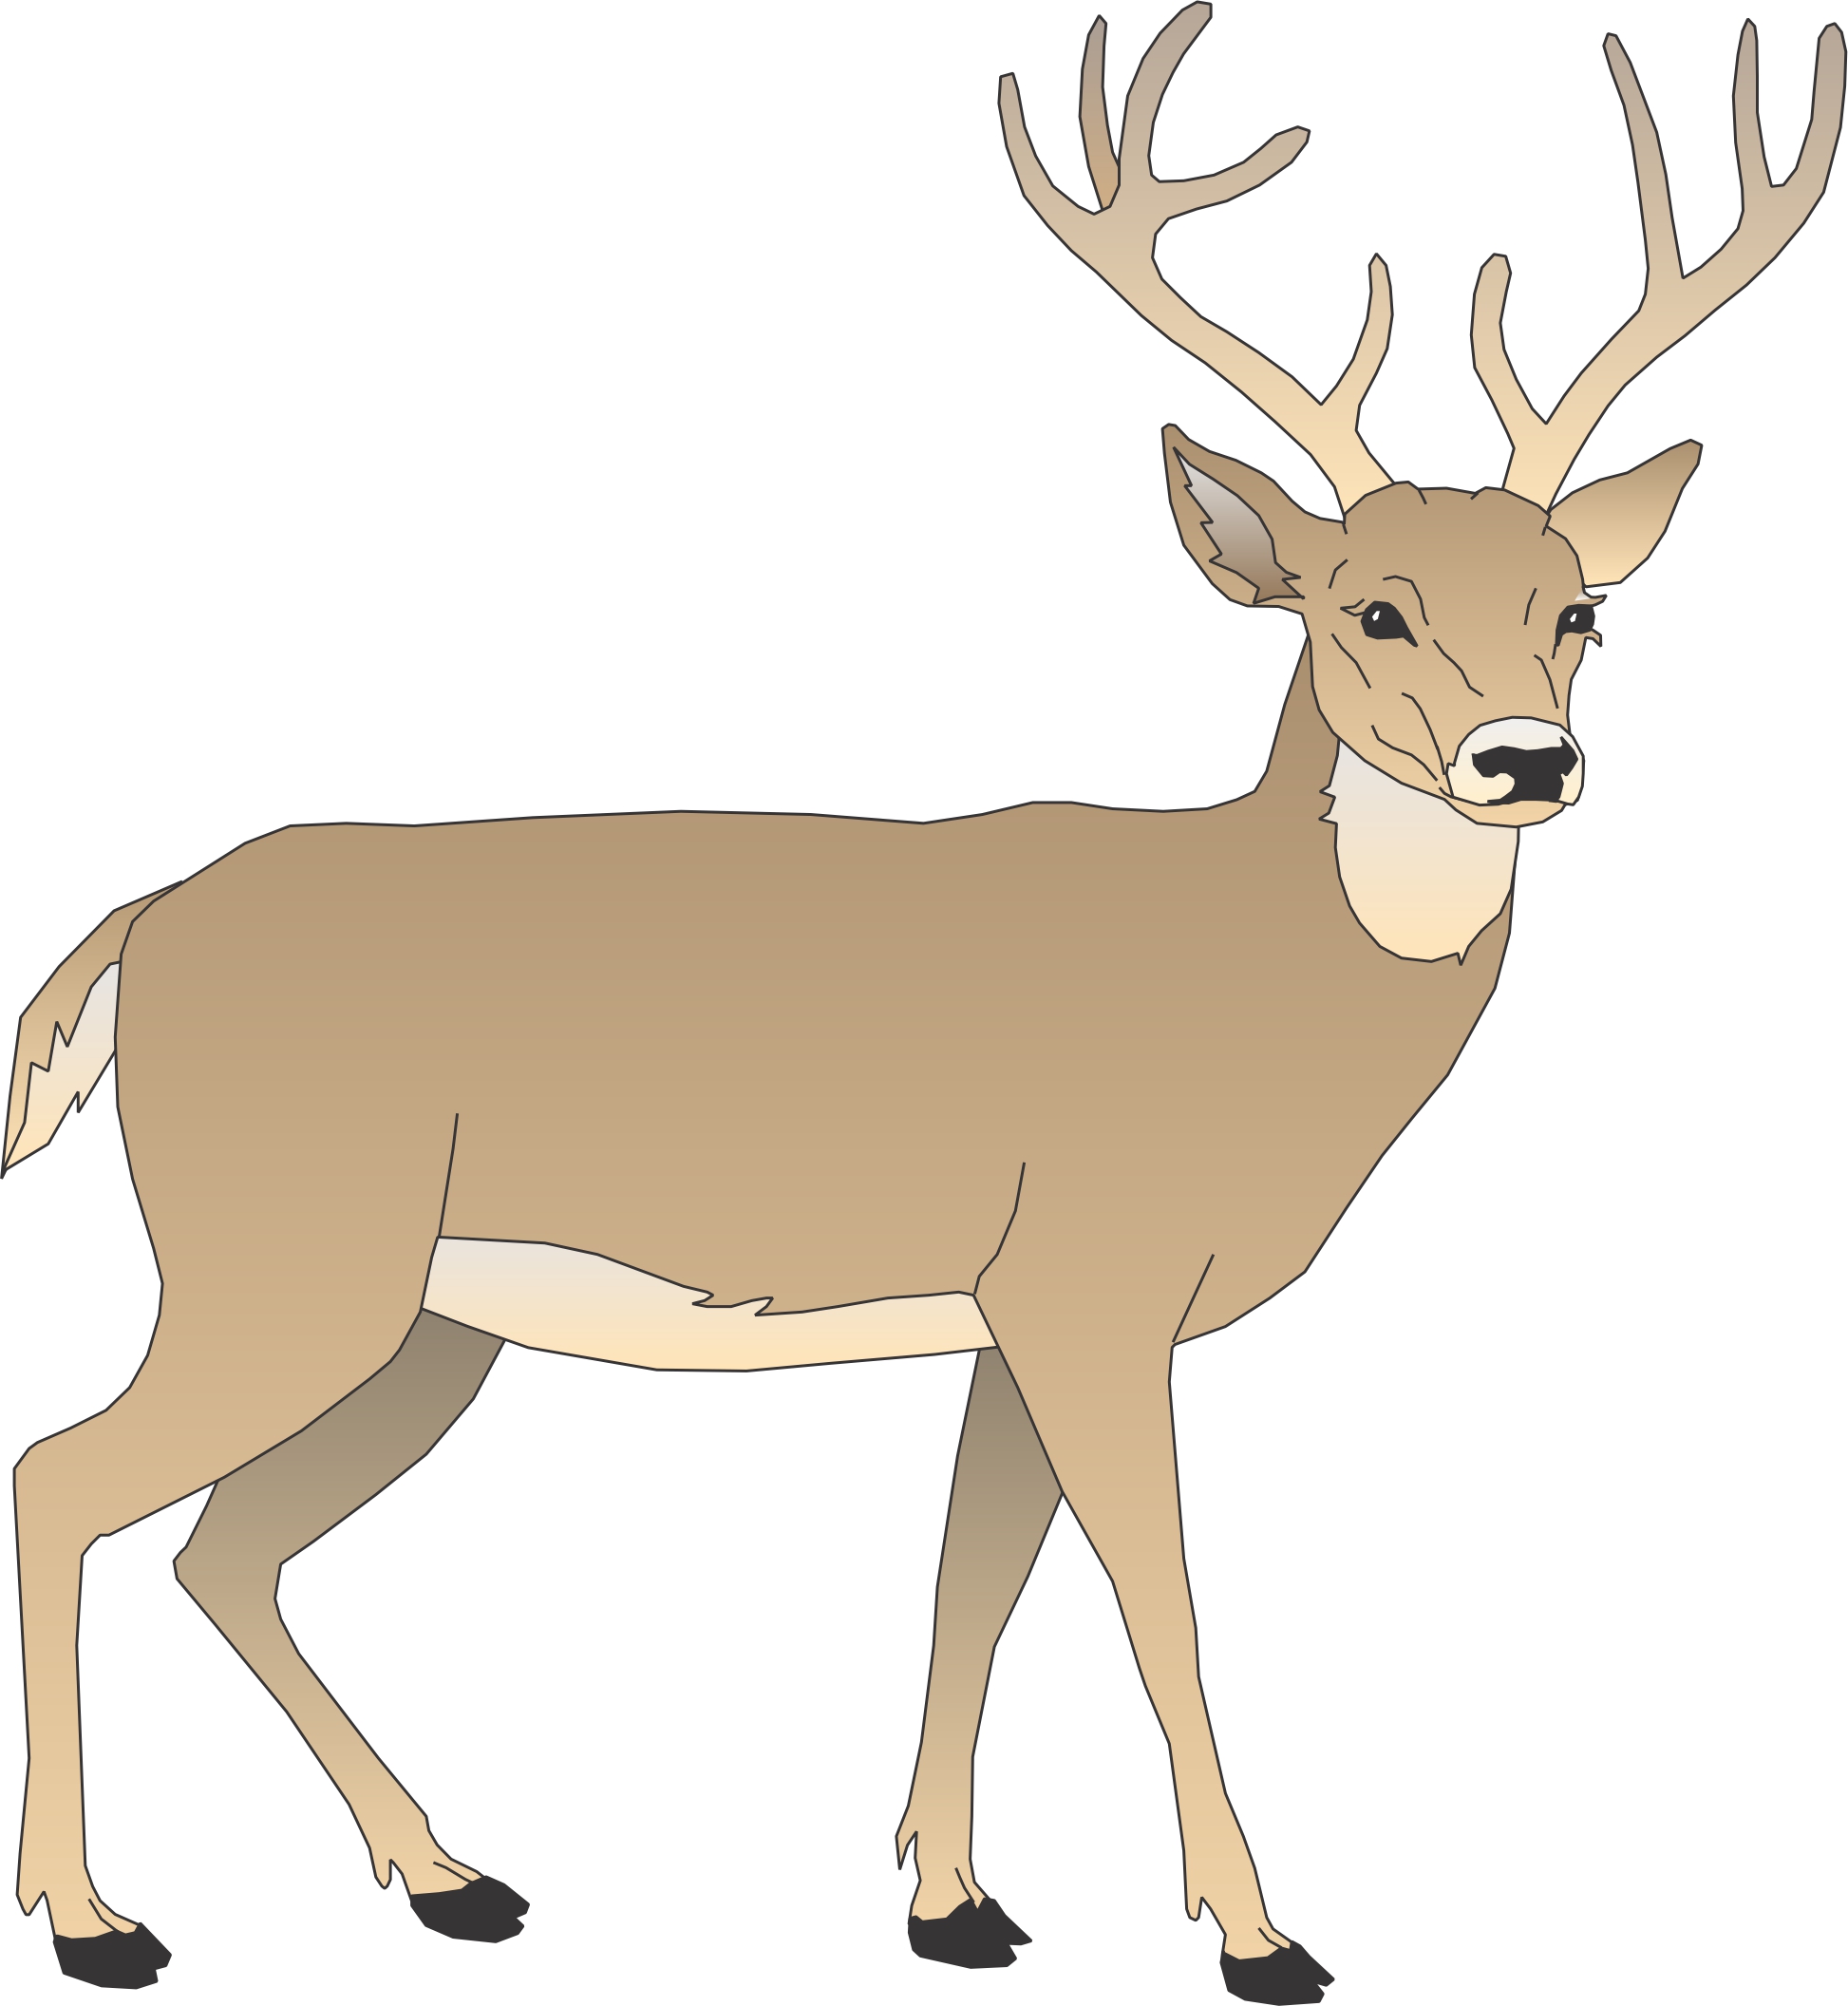 Free Cartoon Pictures Of Deer, Download Free Cartoon Pictures Of Deer png images, Free ClipArts